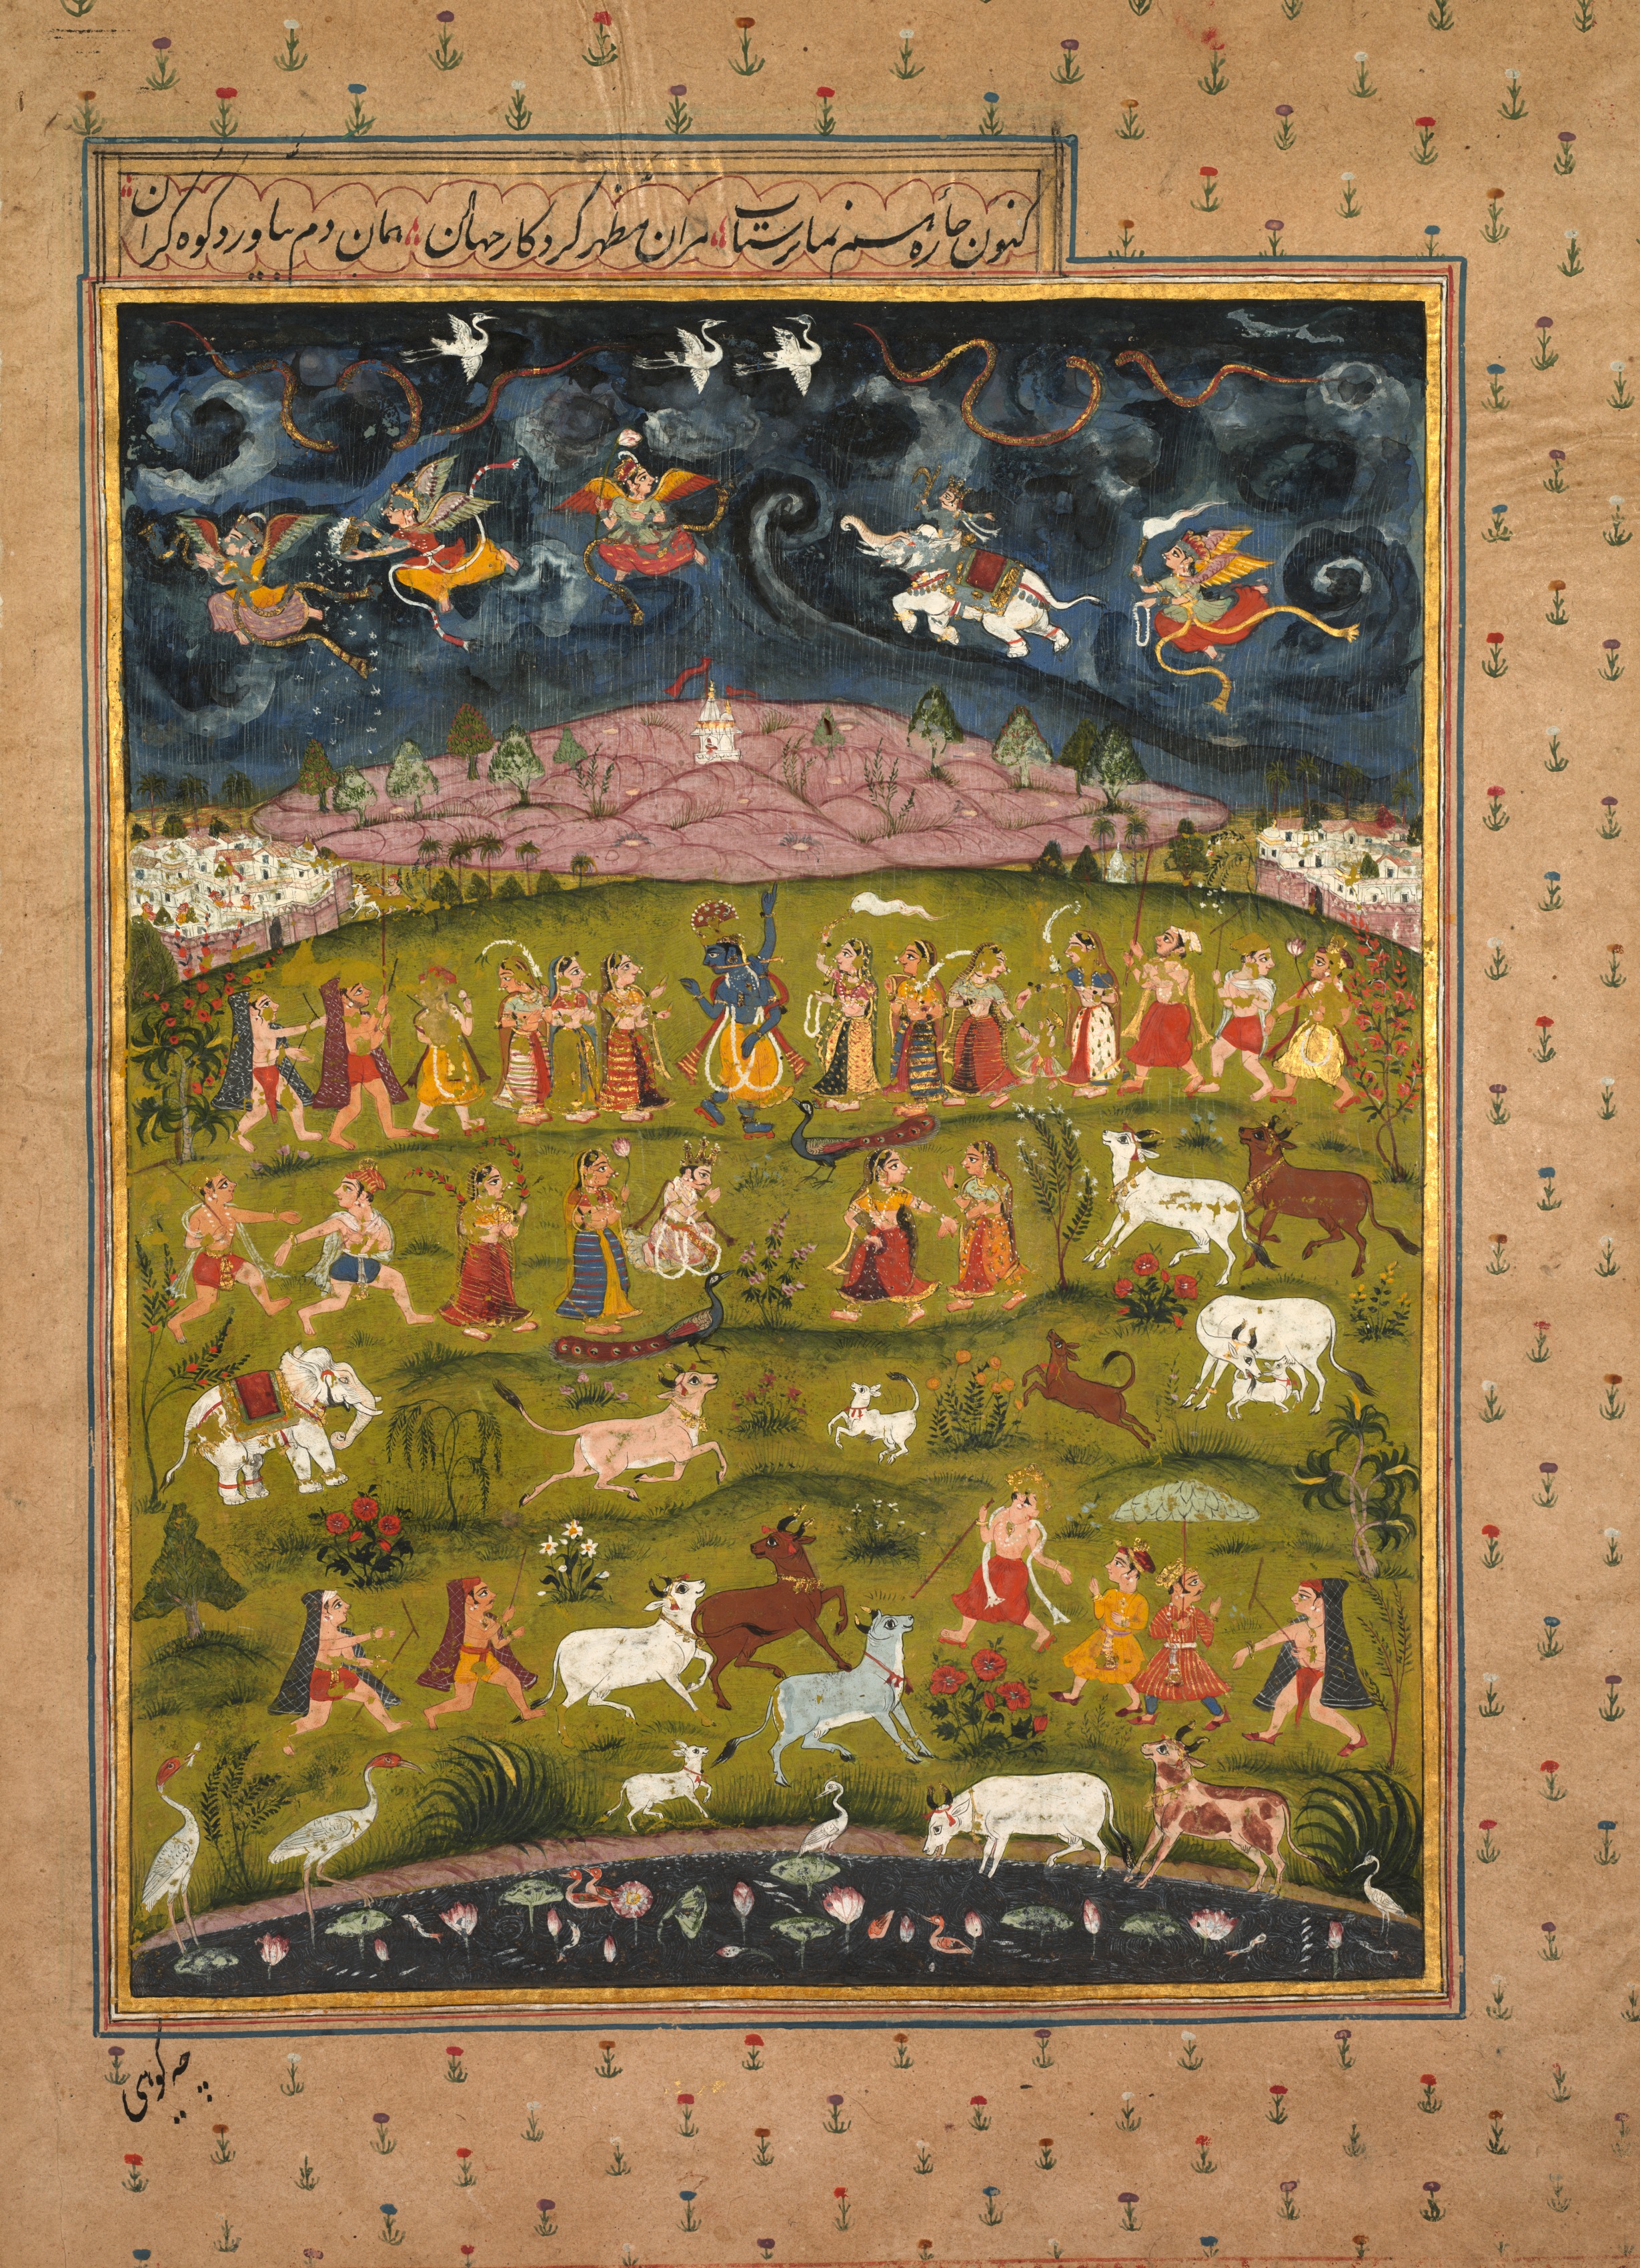 Krishna Lifting Mount Govardhan, from a Persian translation of the Bhagavata Purana, c. 1625